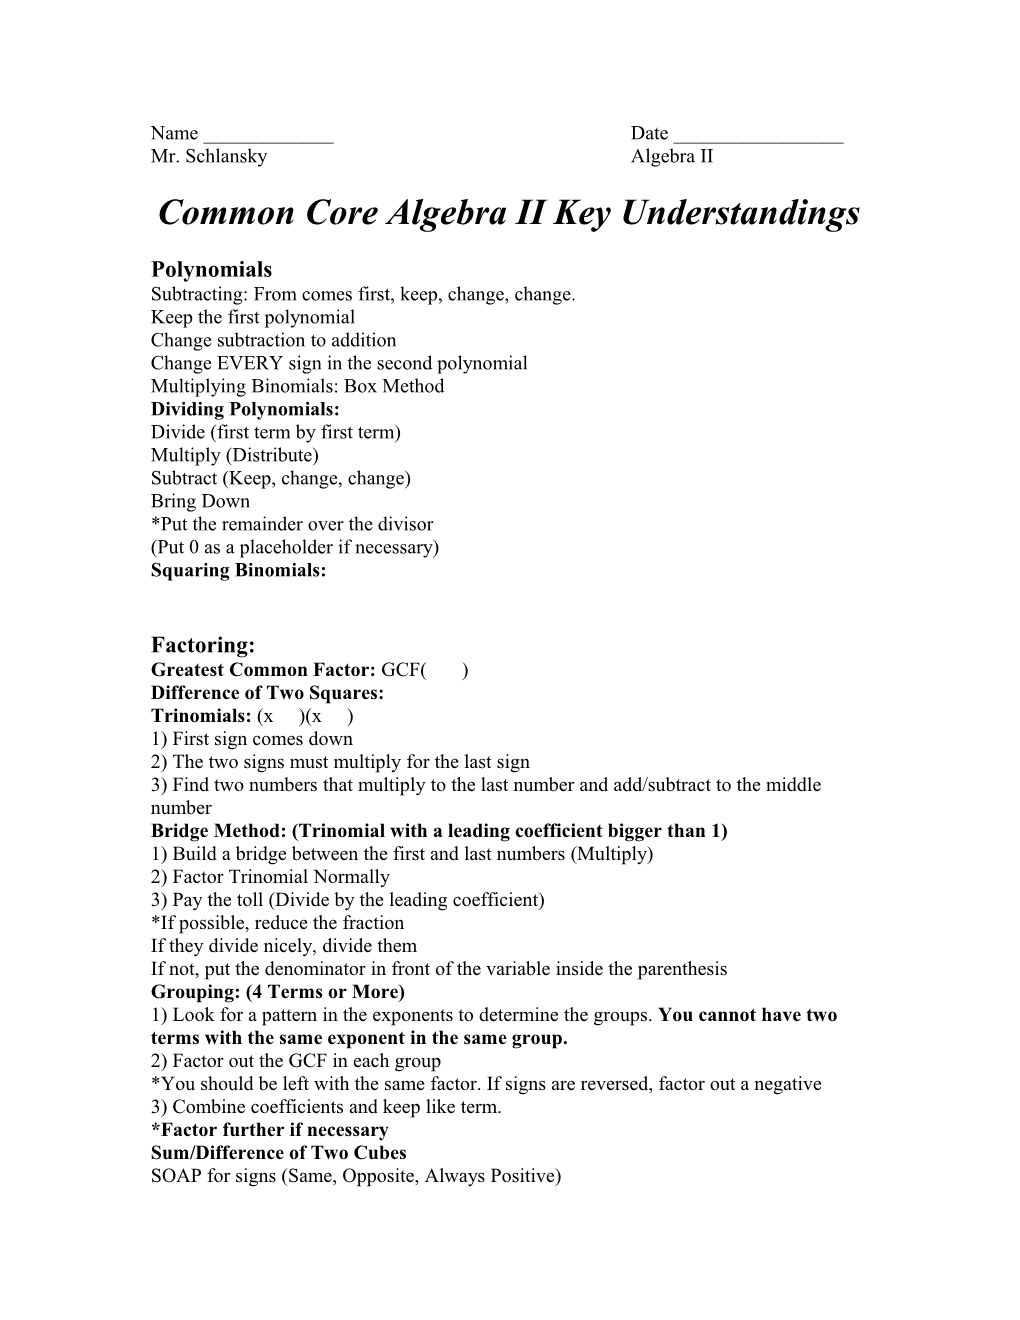 Common Core Algebra II Key Understandings